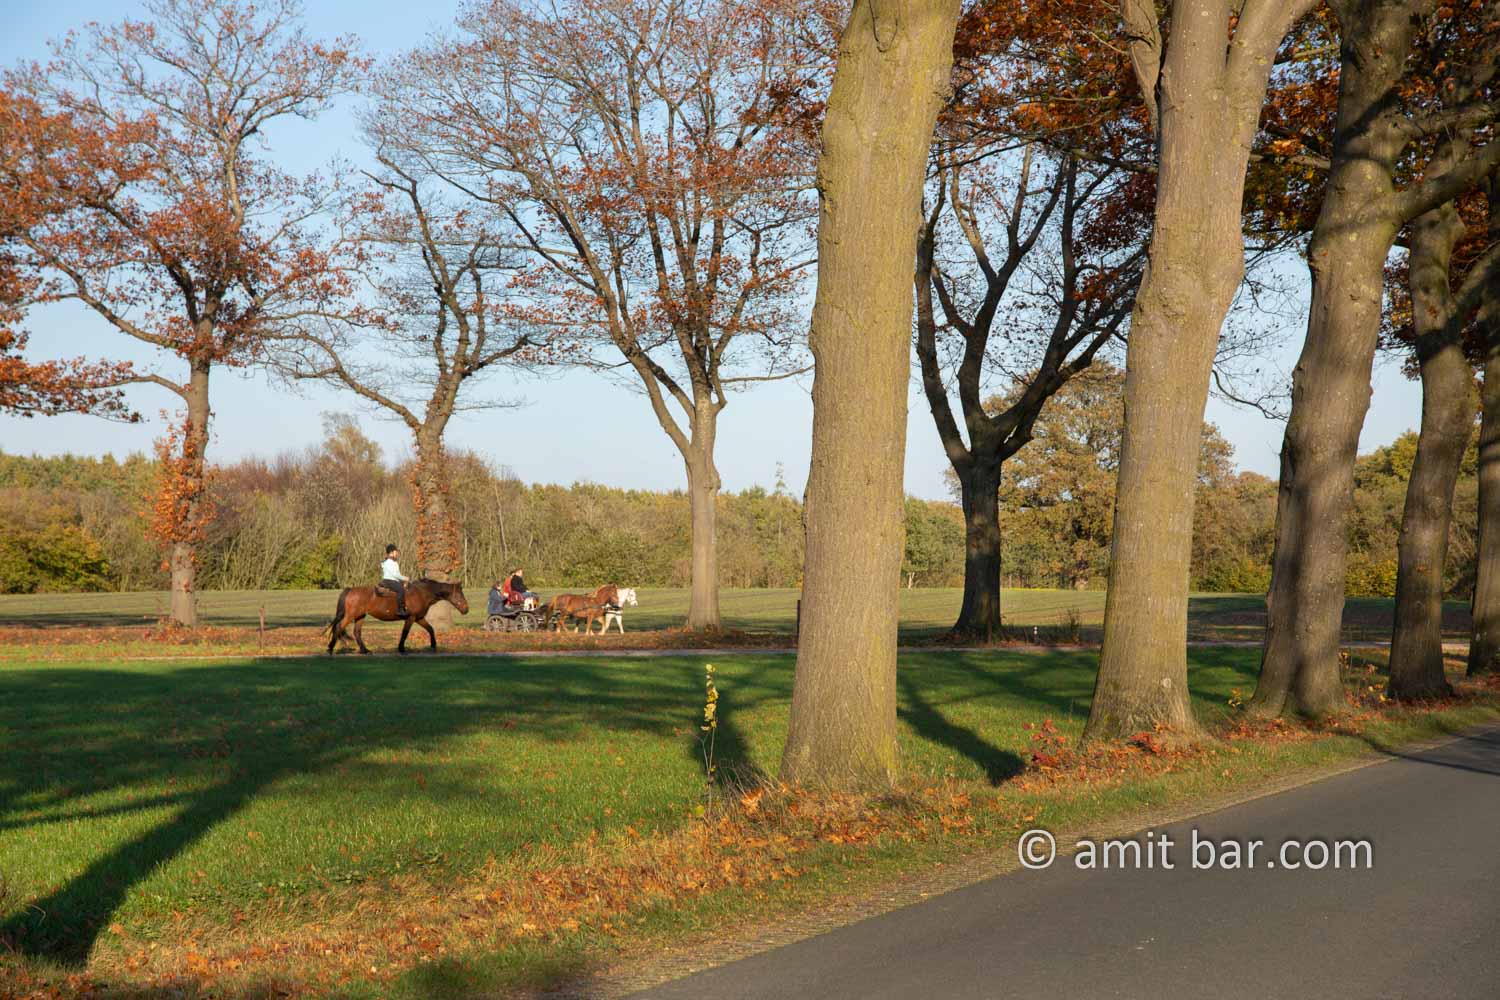 Autumn in De Achterhoek IV: Lanes of oak trees getting orange color